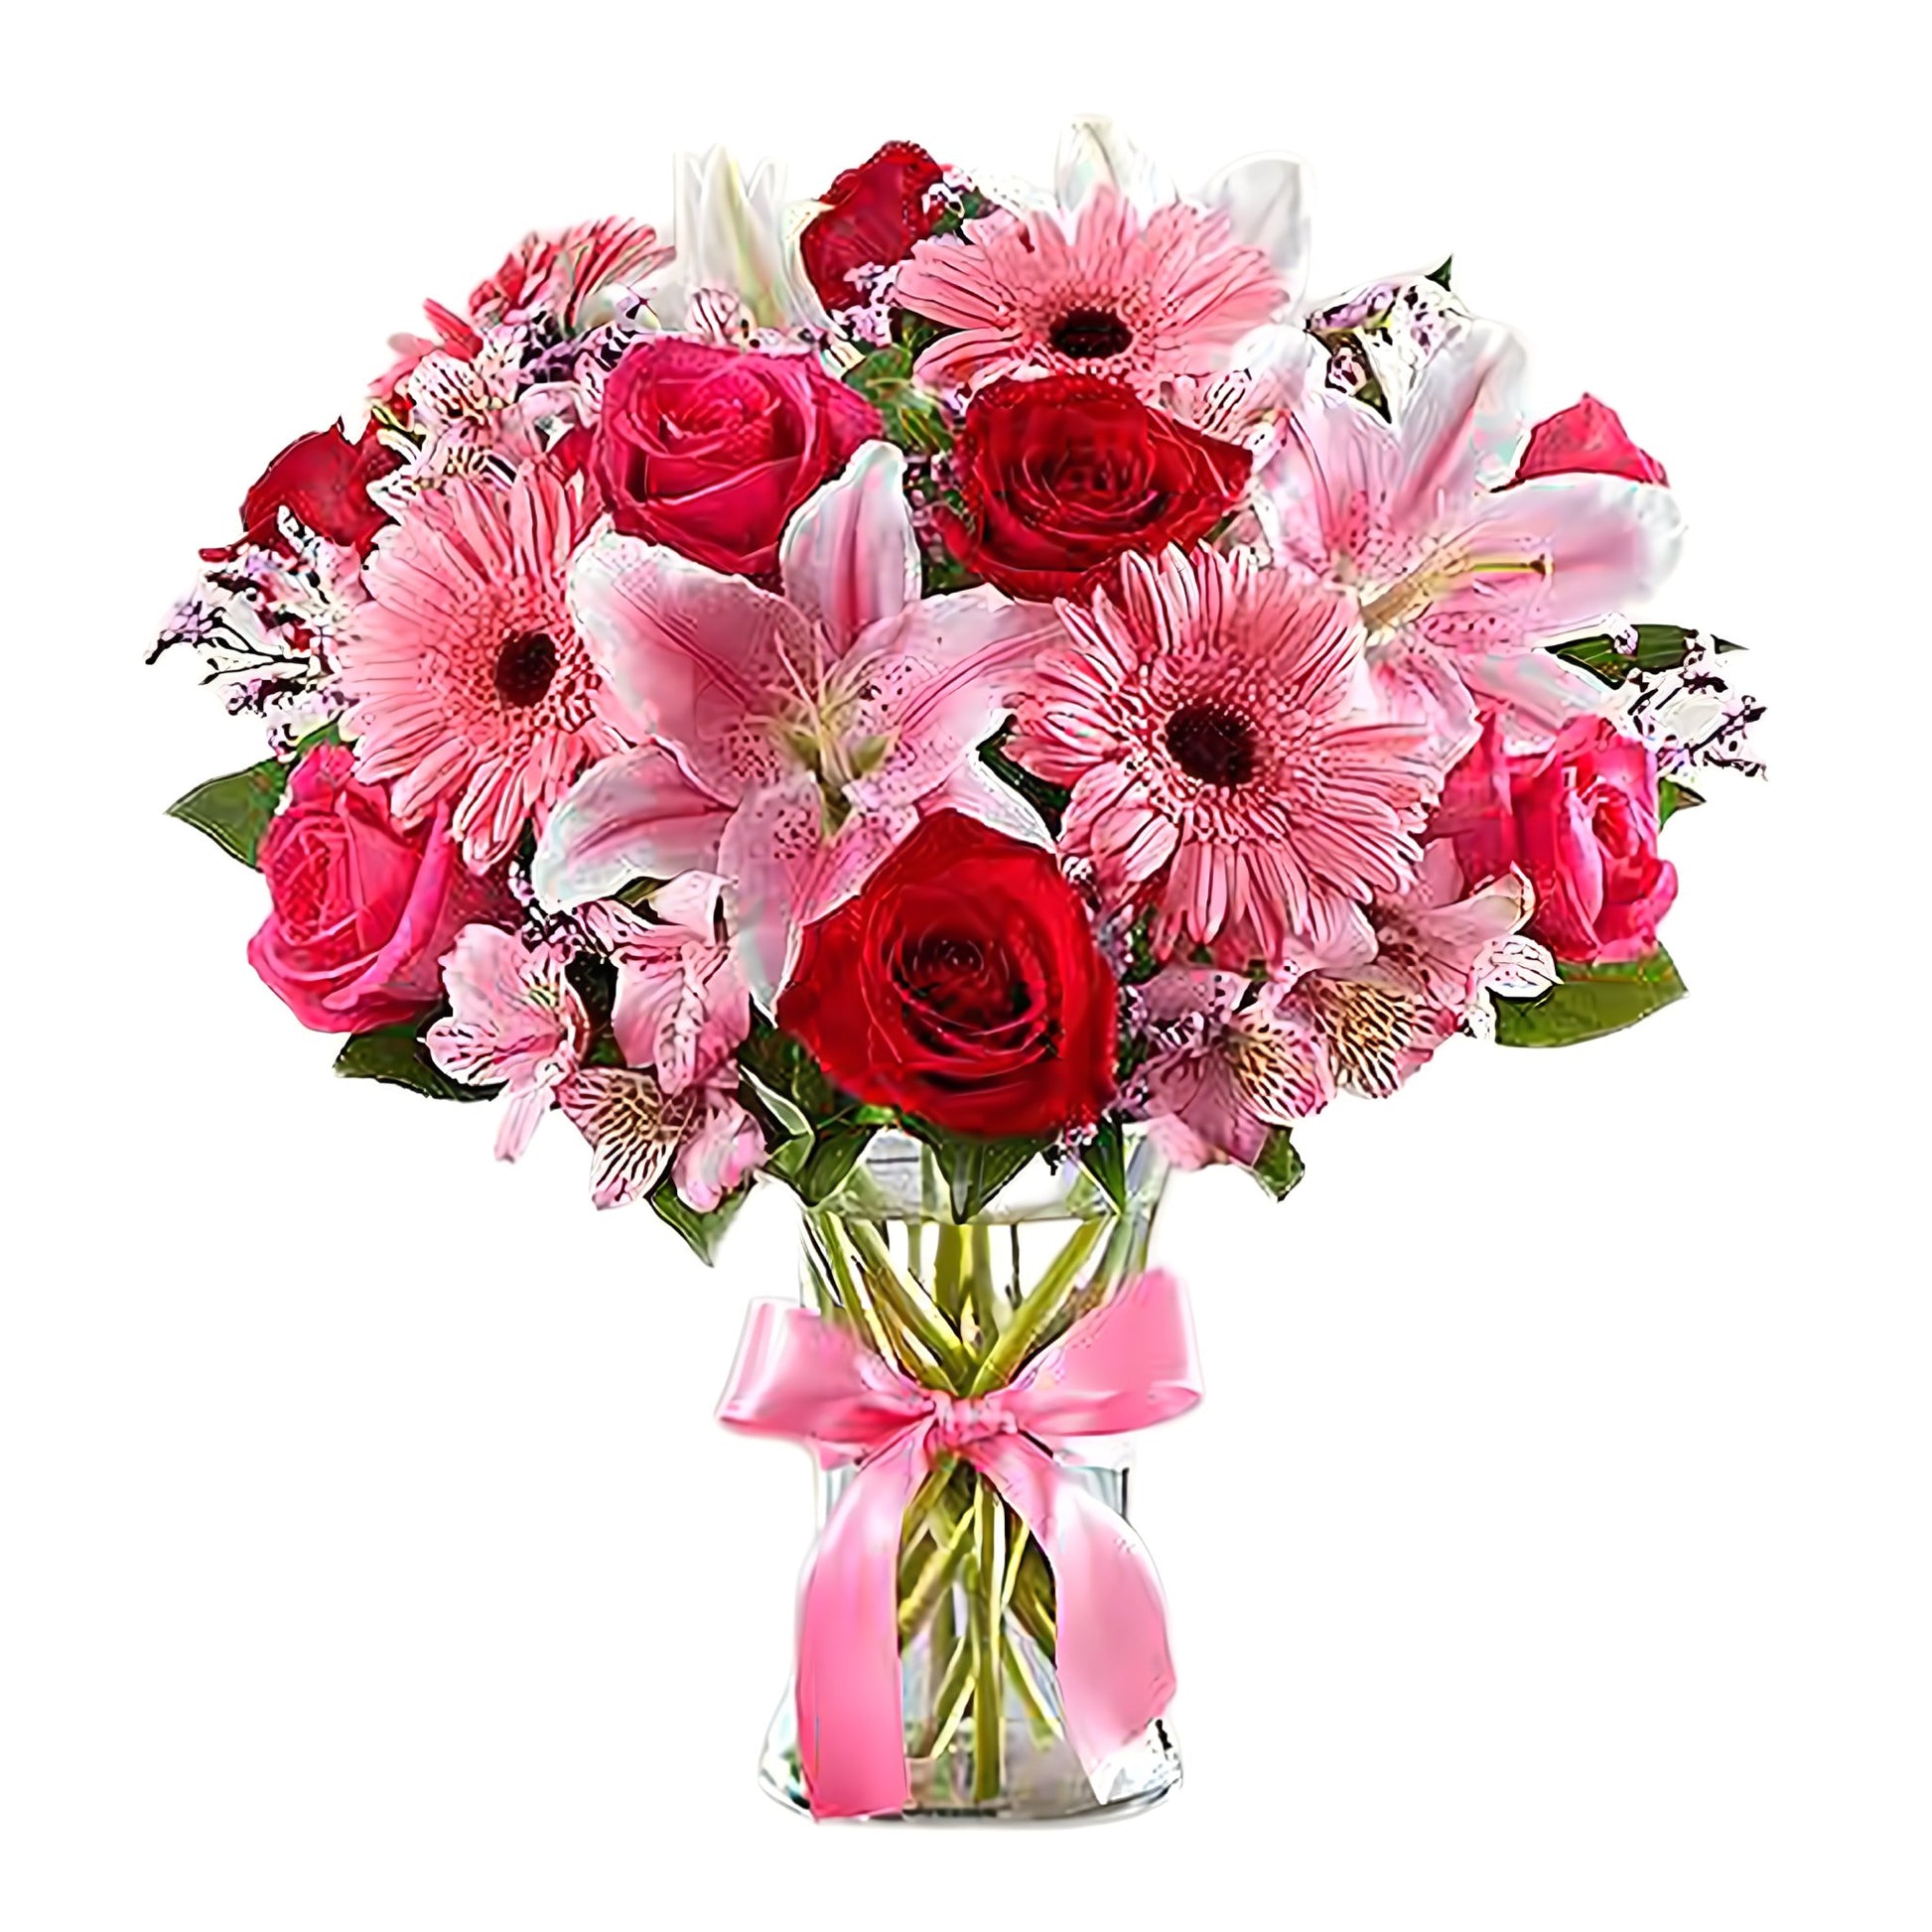 Fields of Romance - Floral Arrangement - Flower Delivery Brooklyn